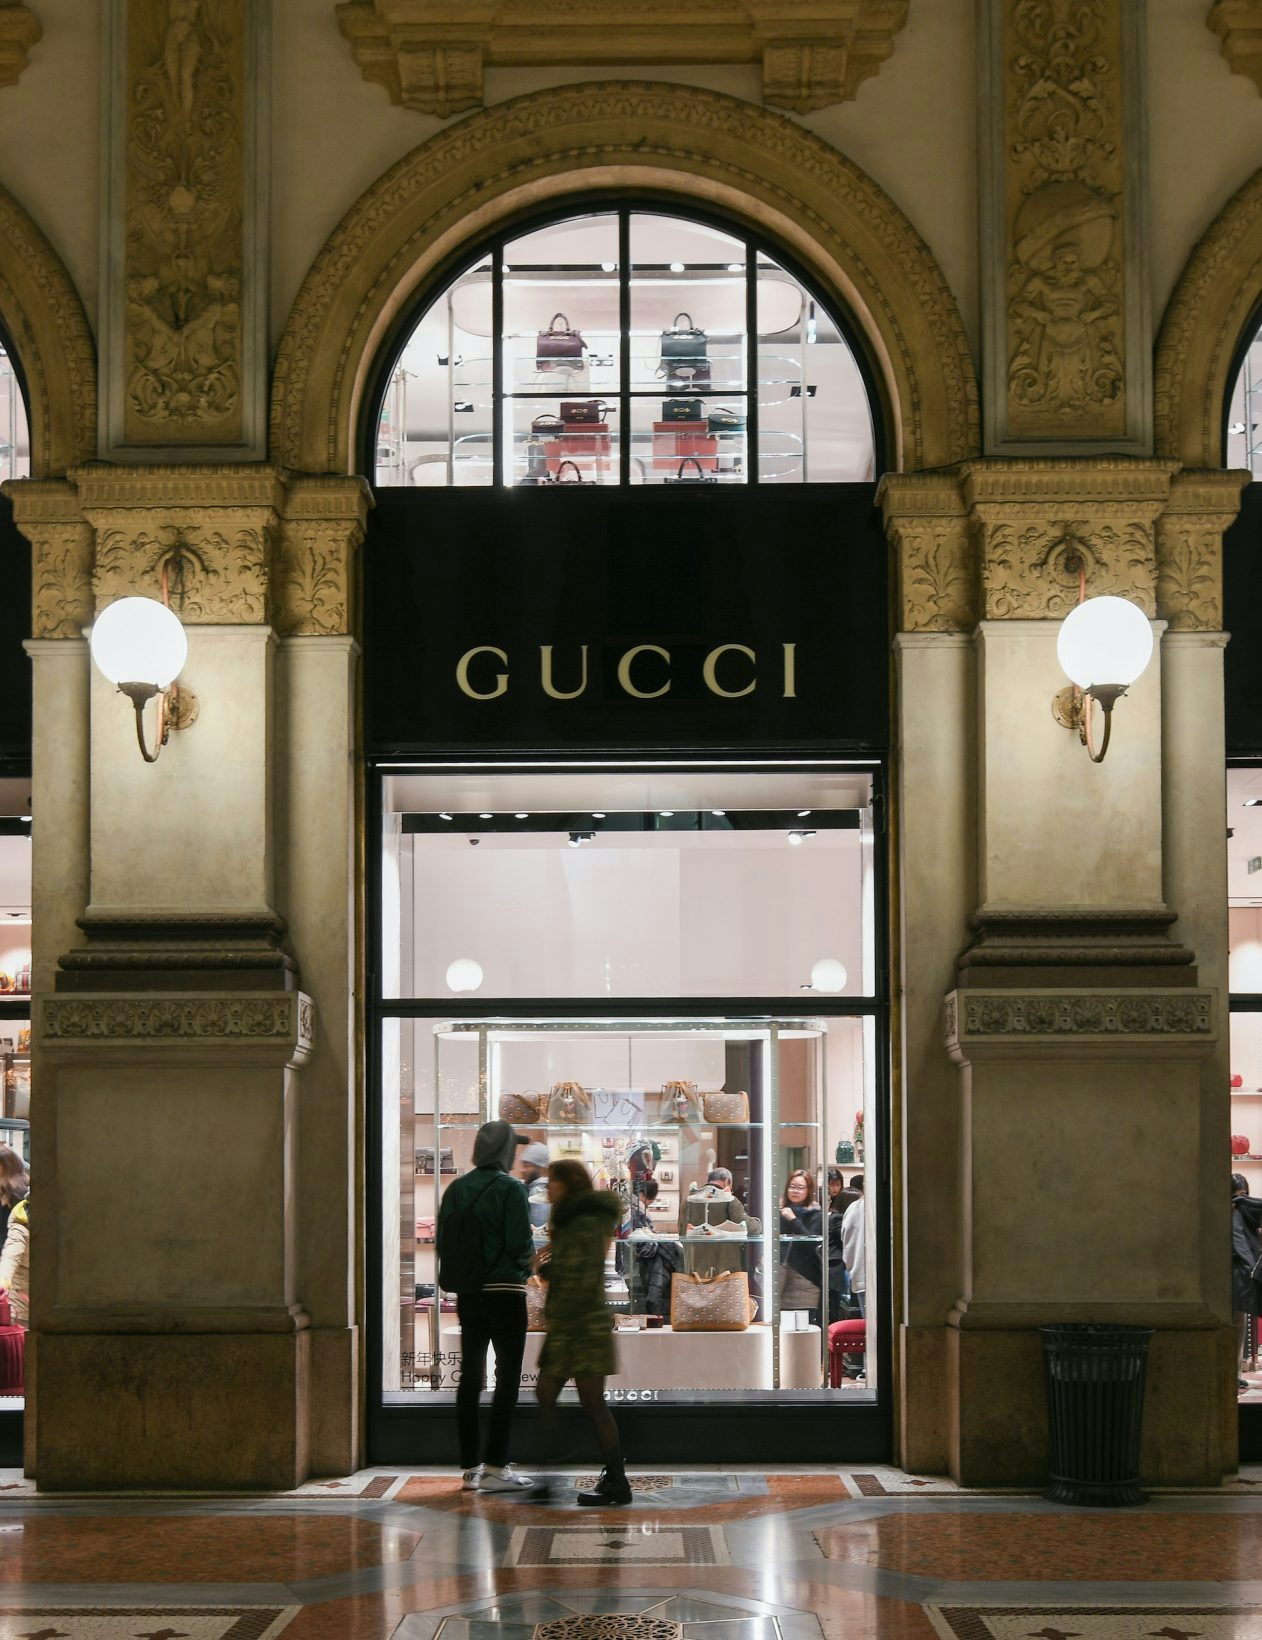 The European Union investigates pricing practices of luxury brands